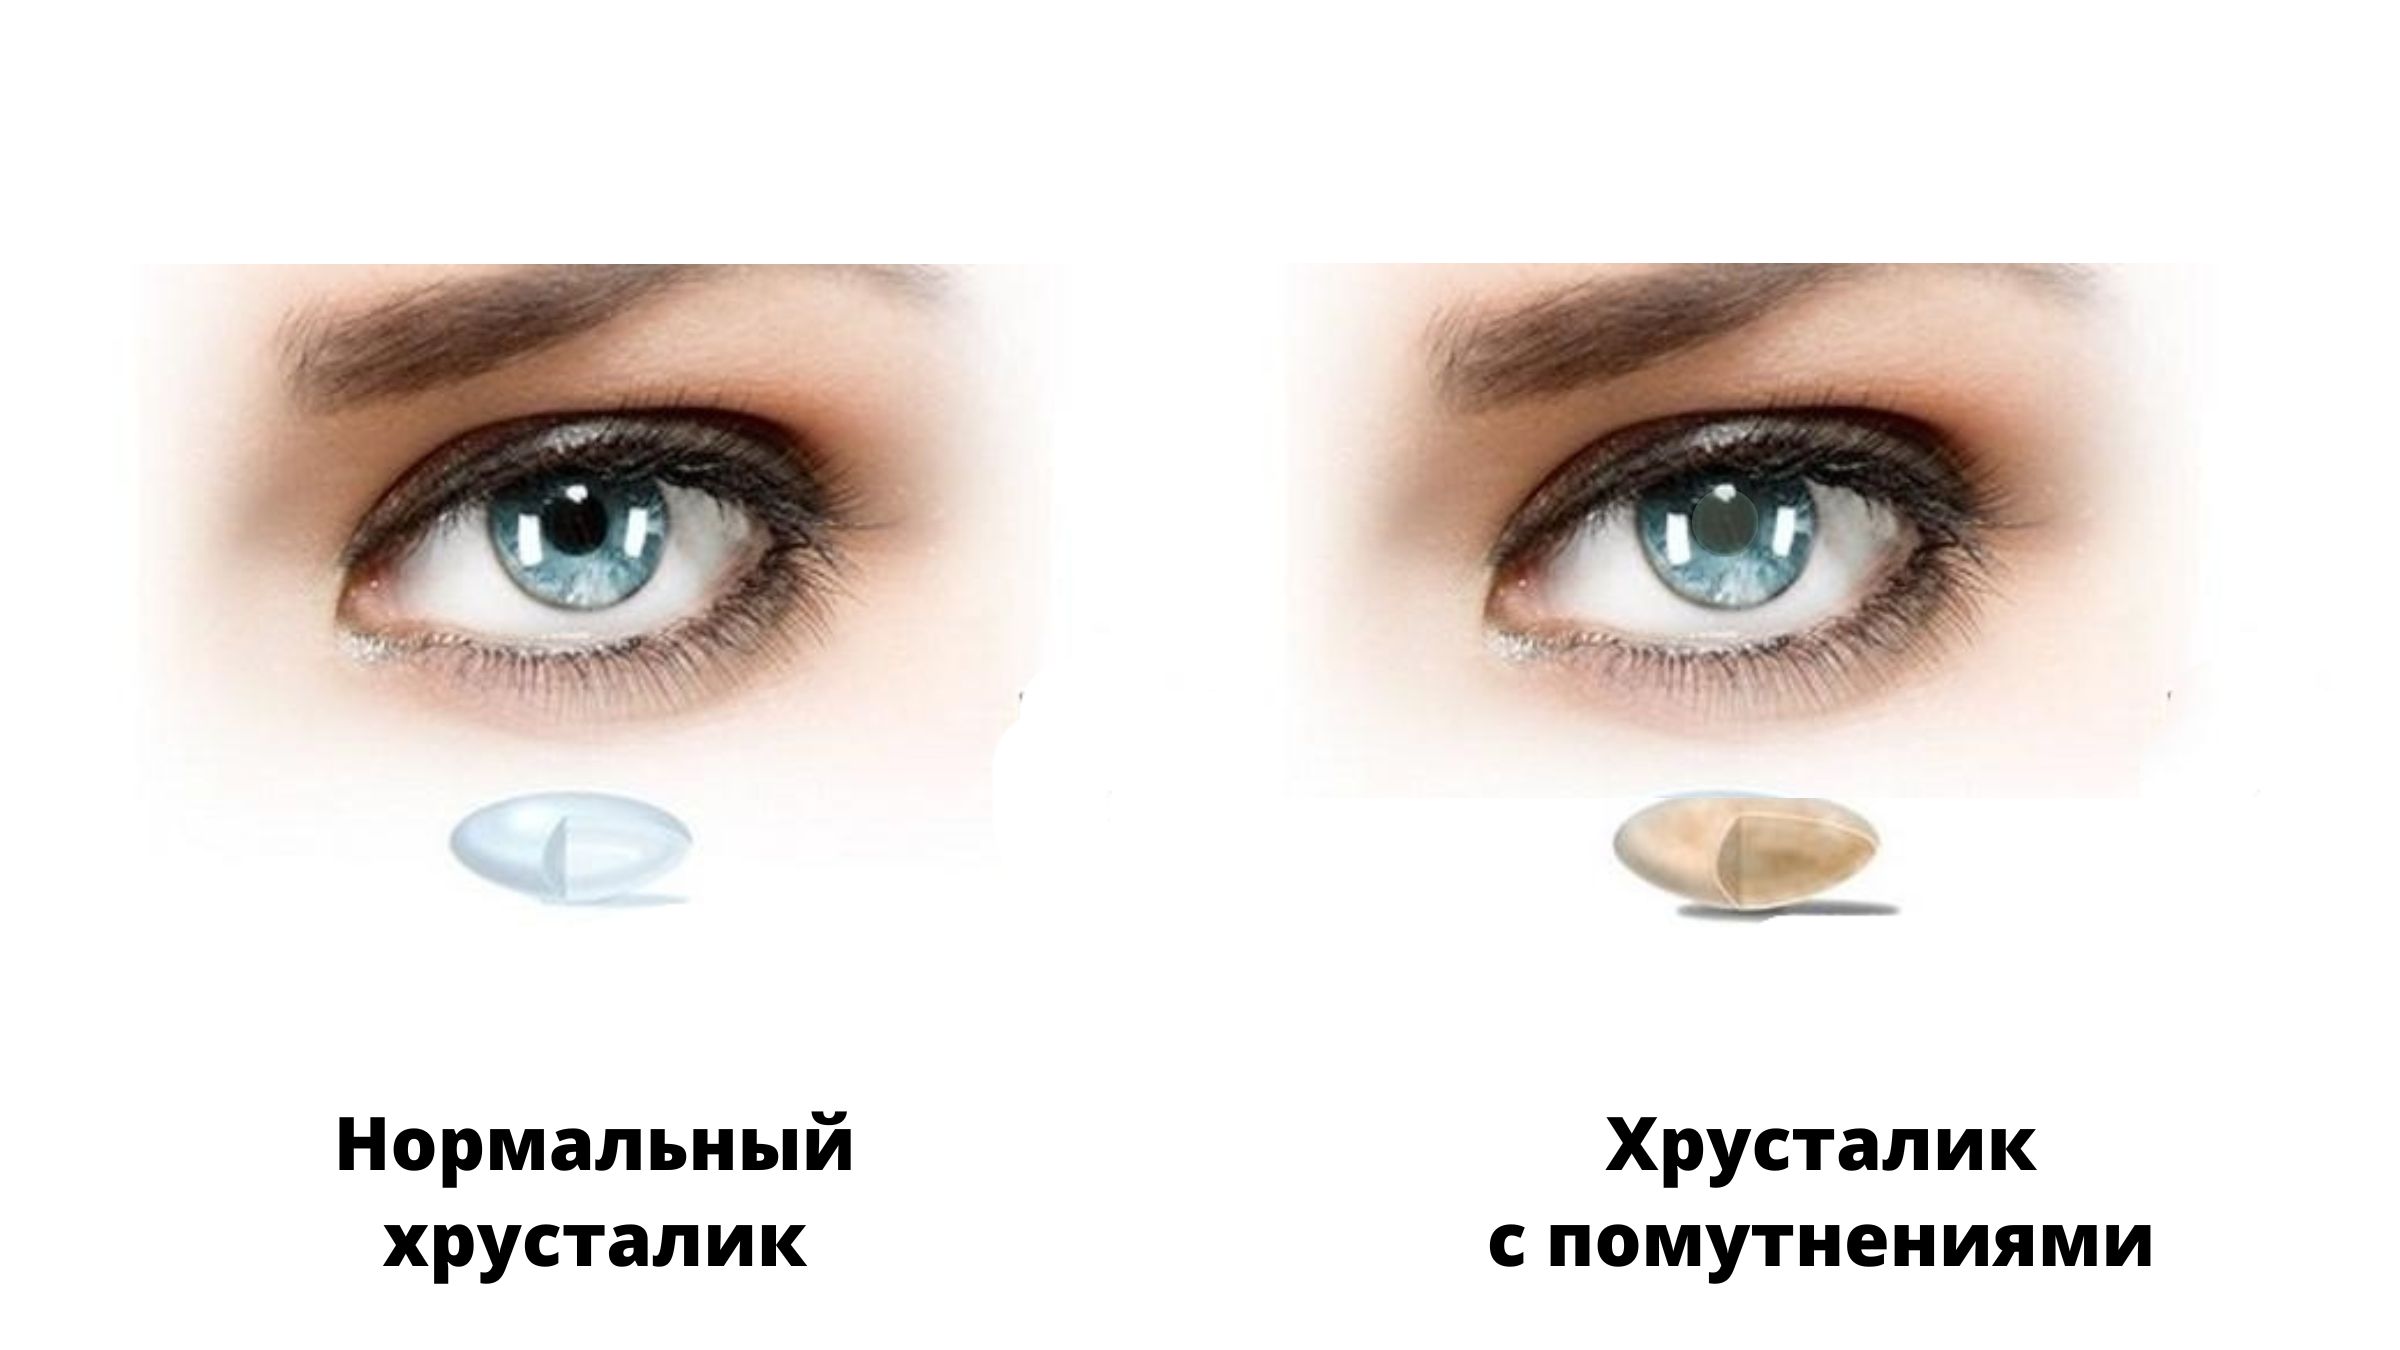 Каковы симптомы катаракты?